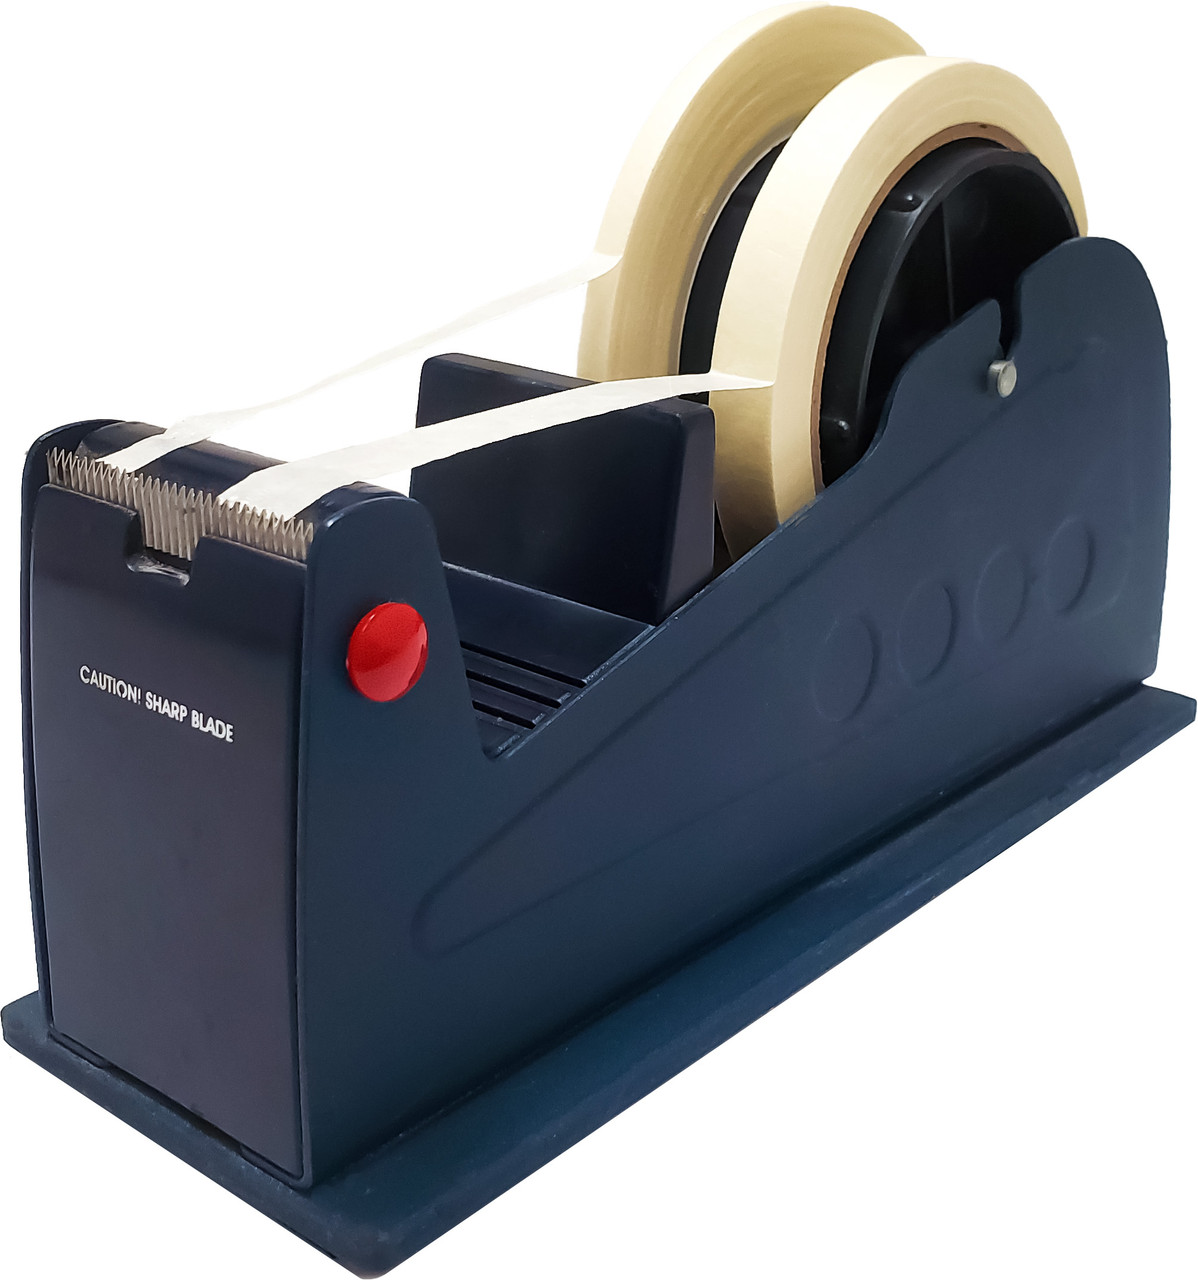 Desktop Tape Dispenser Holder with Large 3 inch Core for Masking Tape, Heat